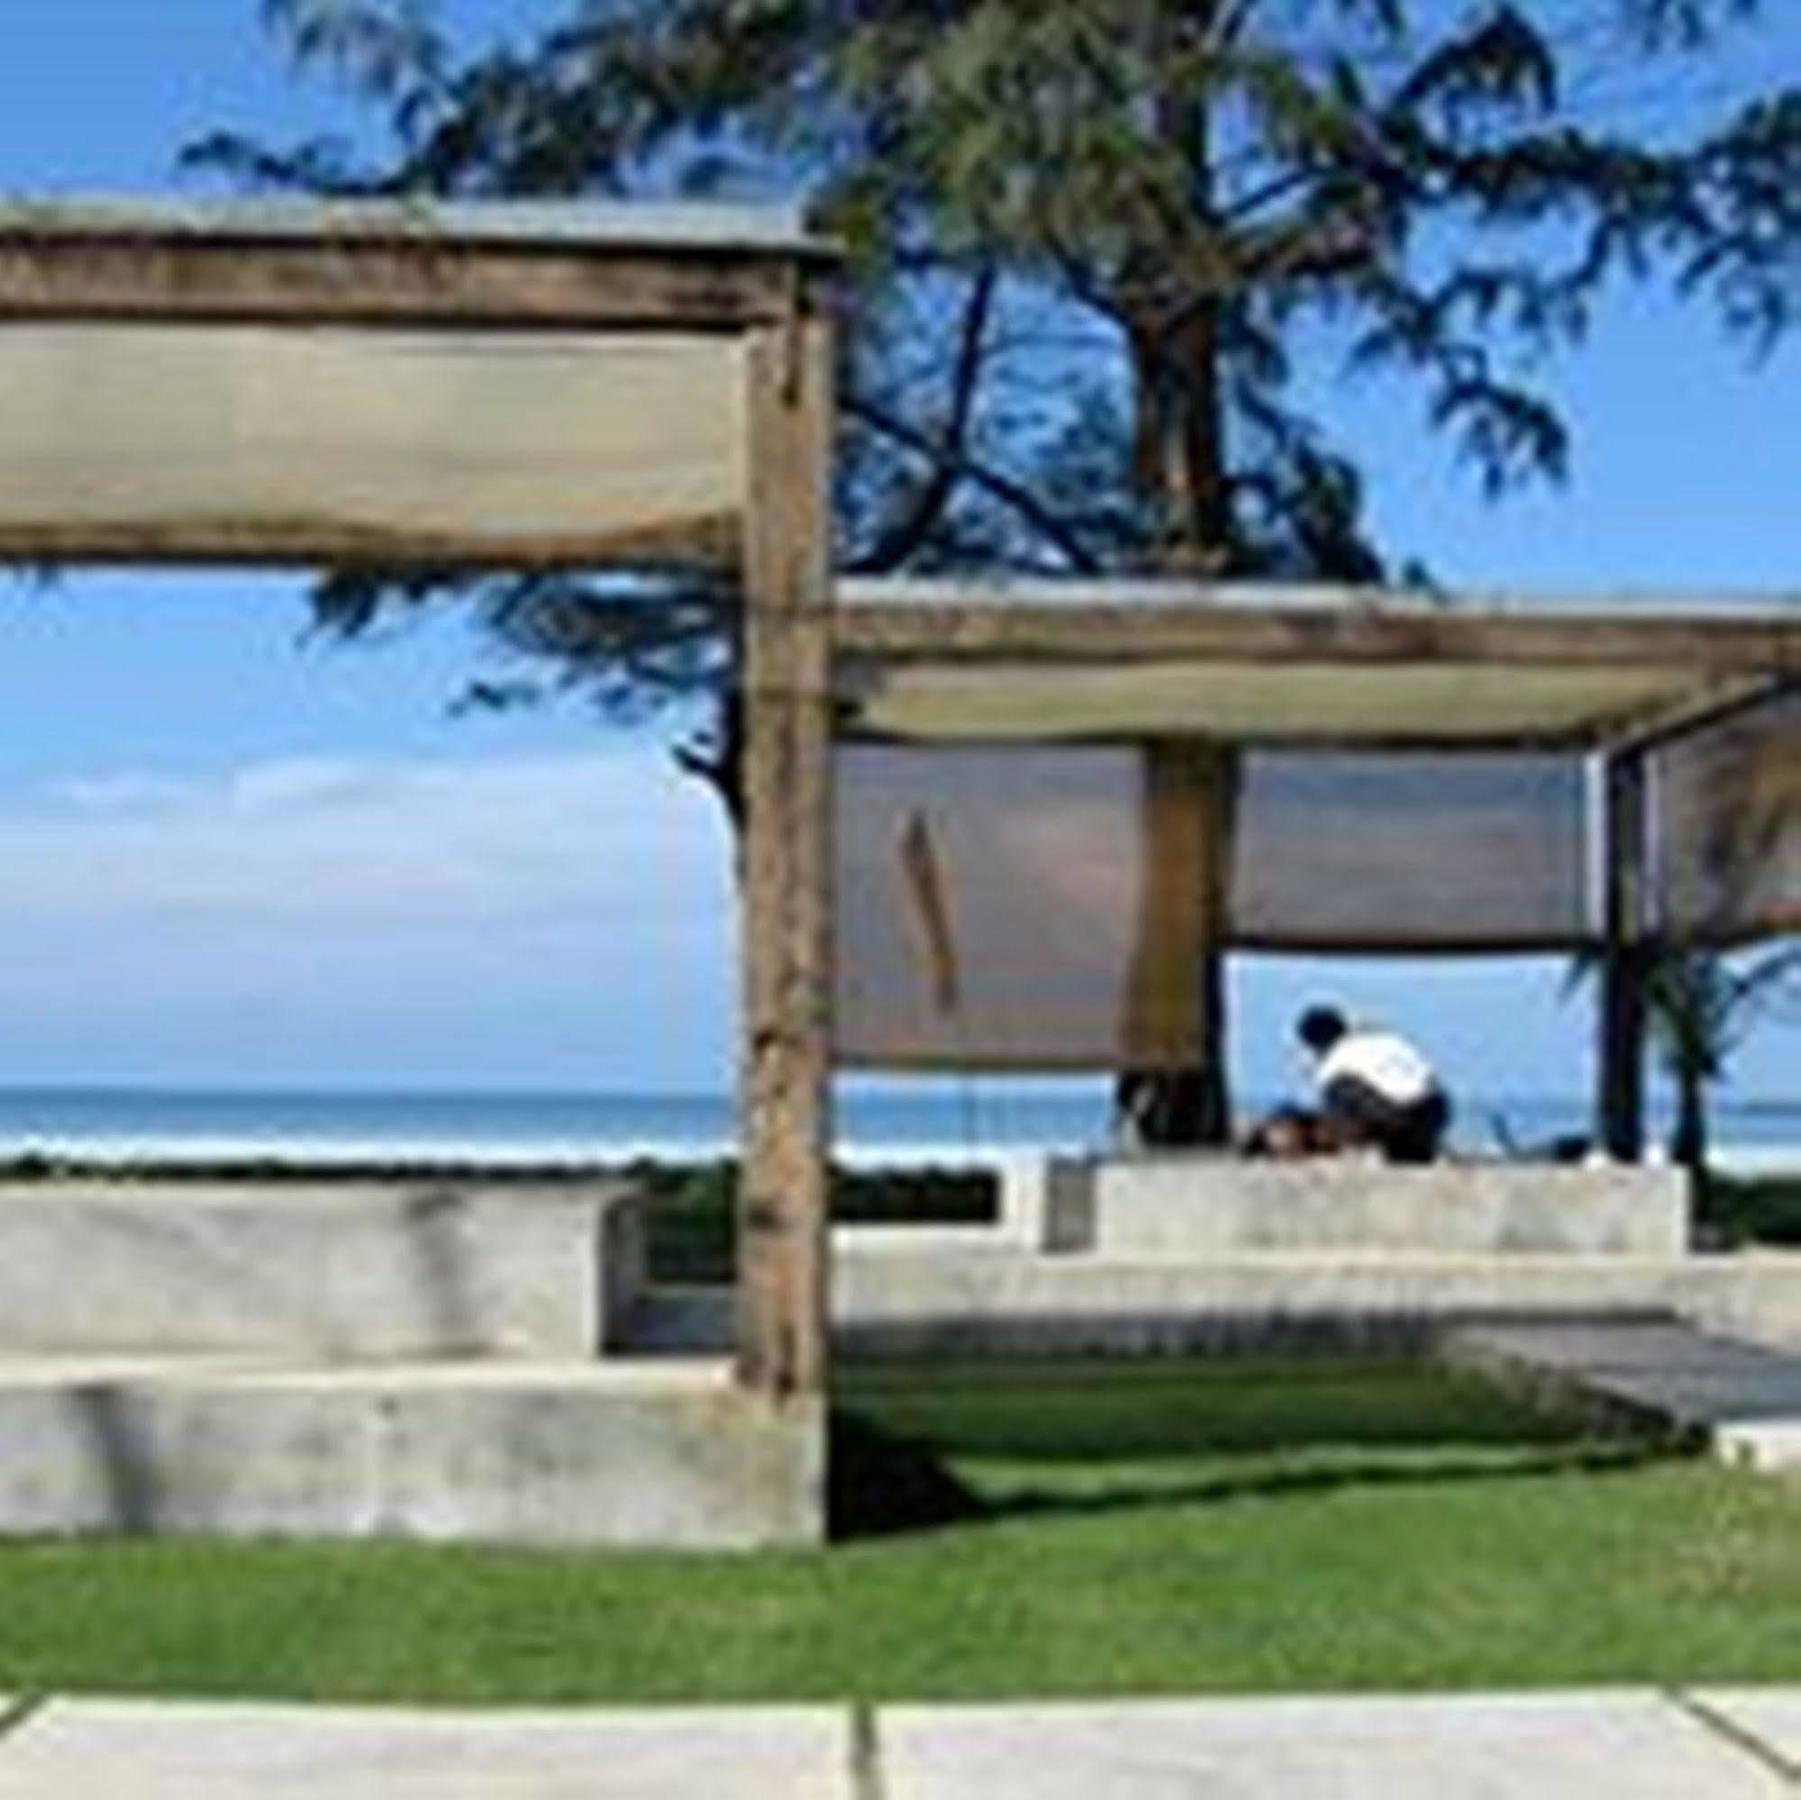 Costa Lanta - Adult Only Hotel Koh Lanta Exterior photo